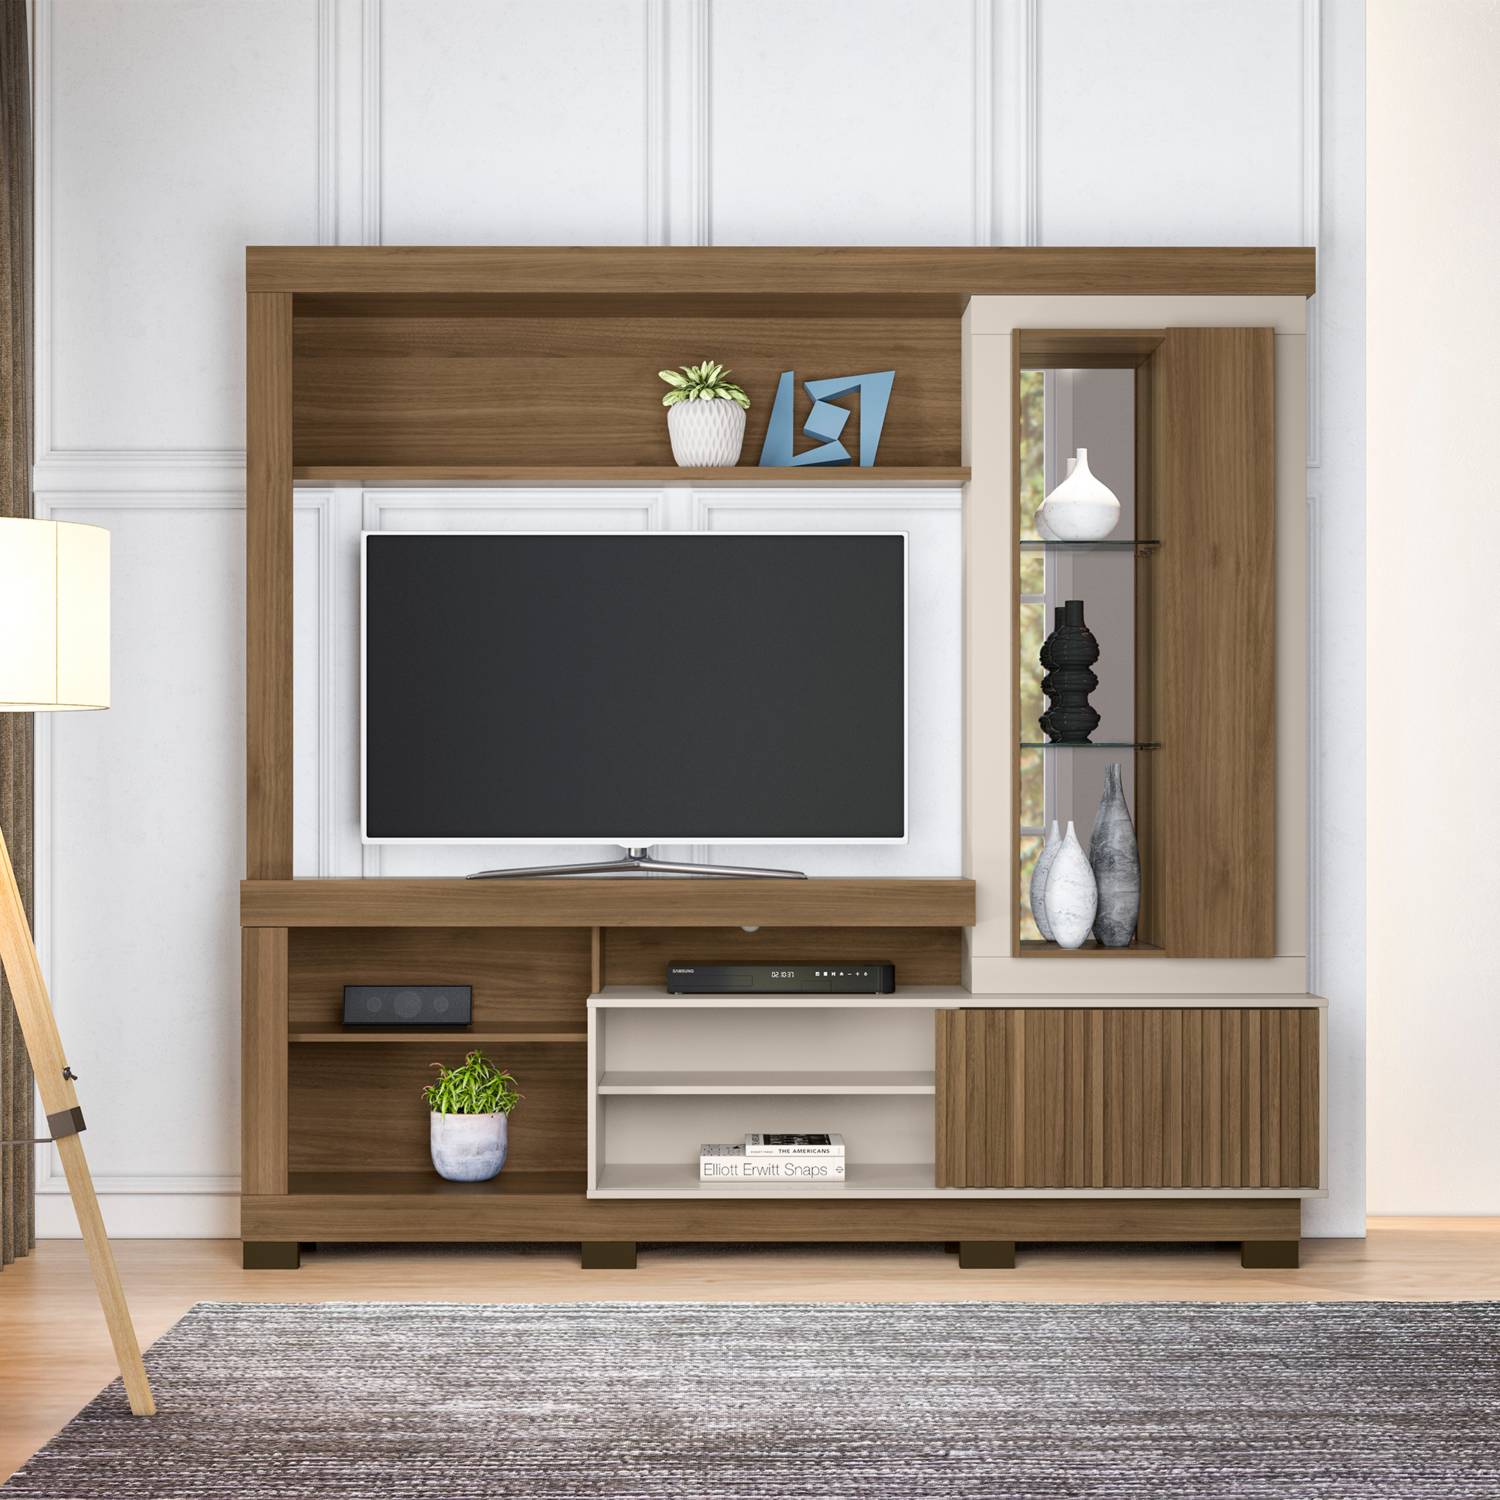 Indefinite frost Modernization Muebles de TV y Racks grandes ofertas | falabella.com